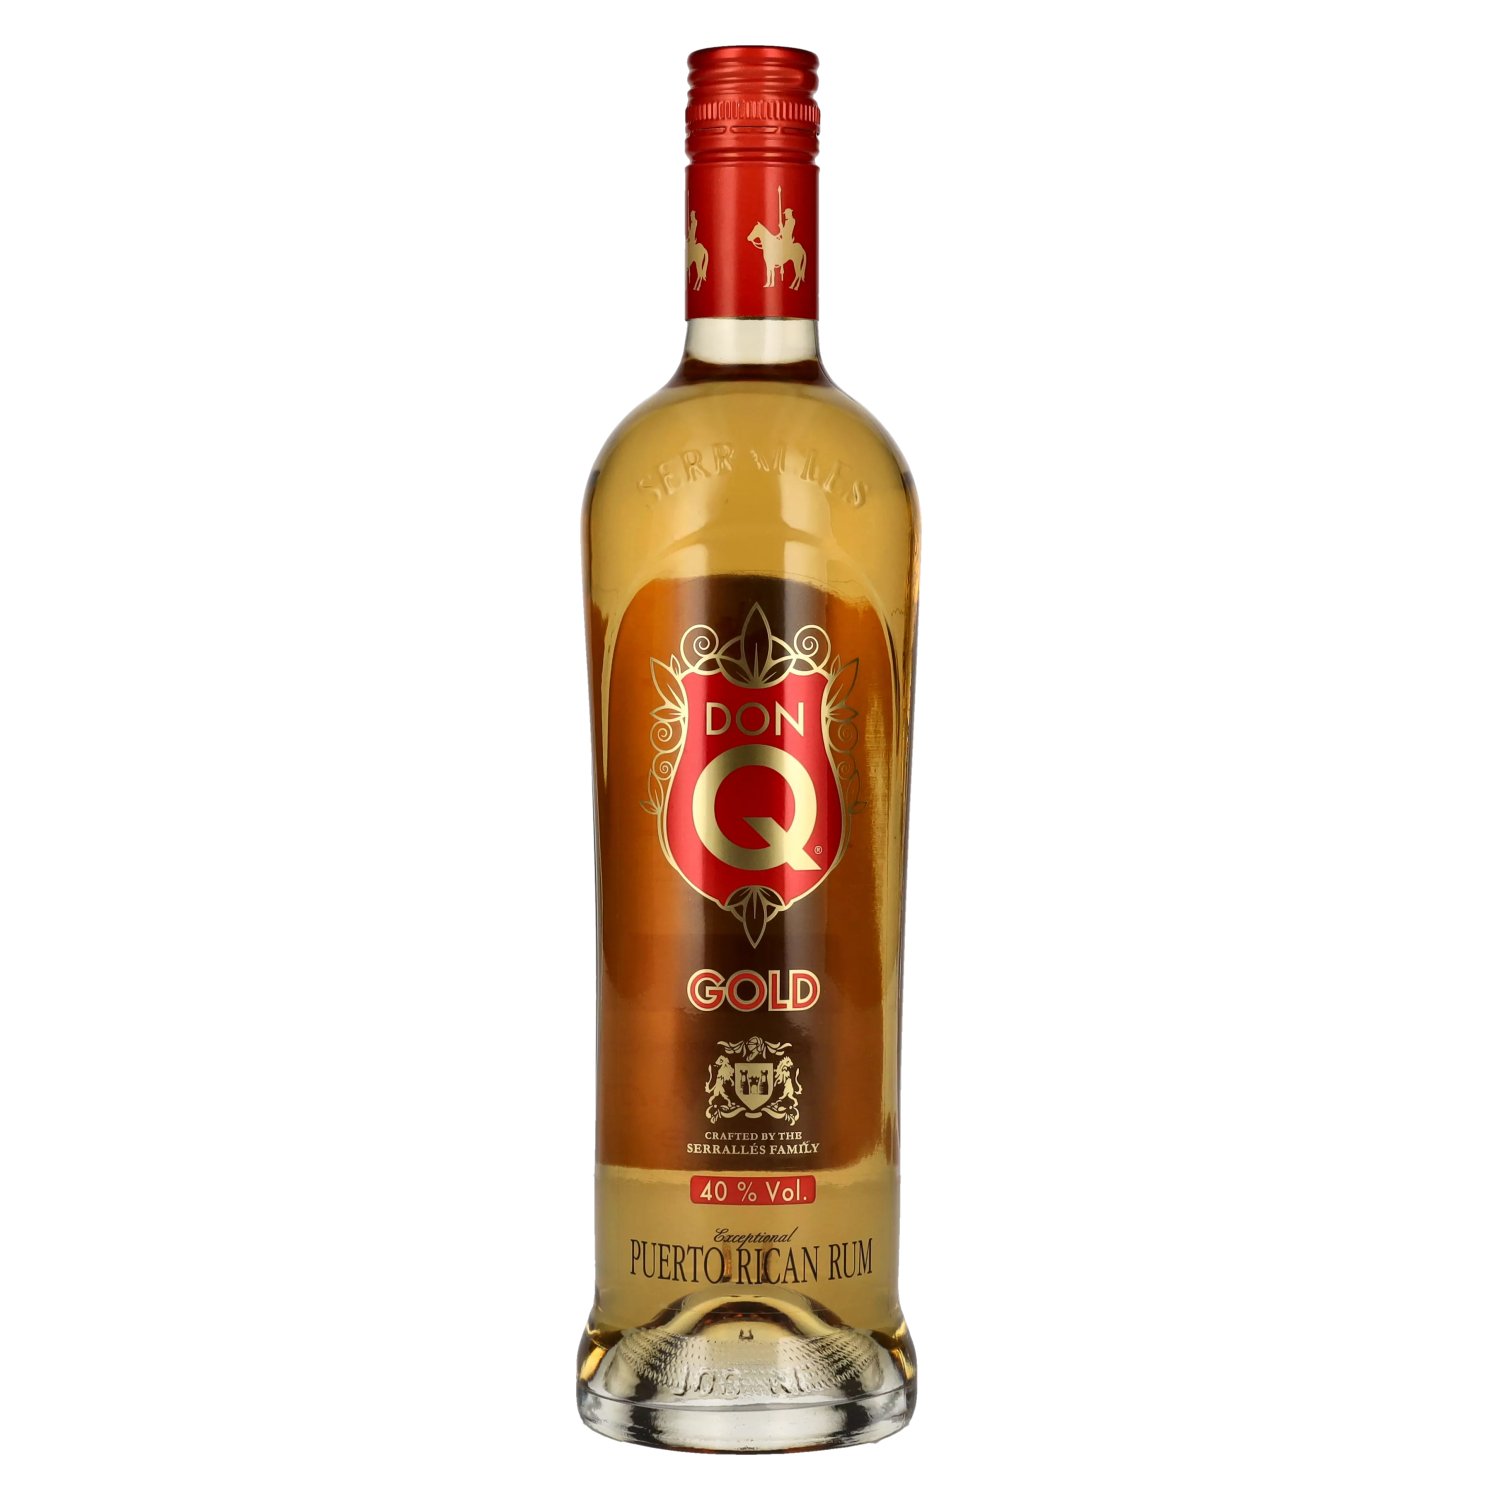 Don Q GOLD Puerto Rican Rum 40% Vol. 0,7l - delicando